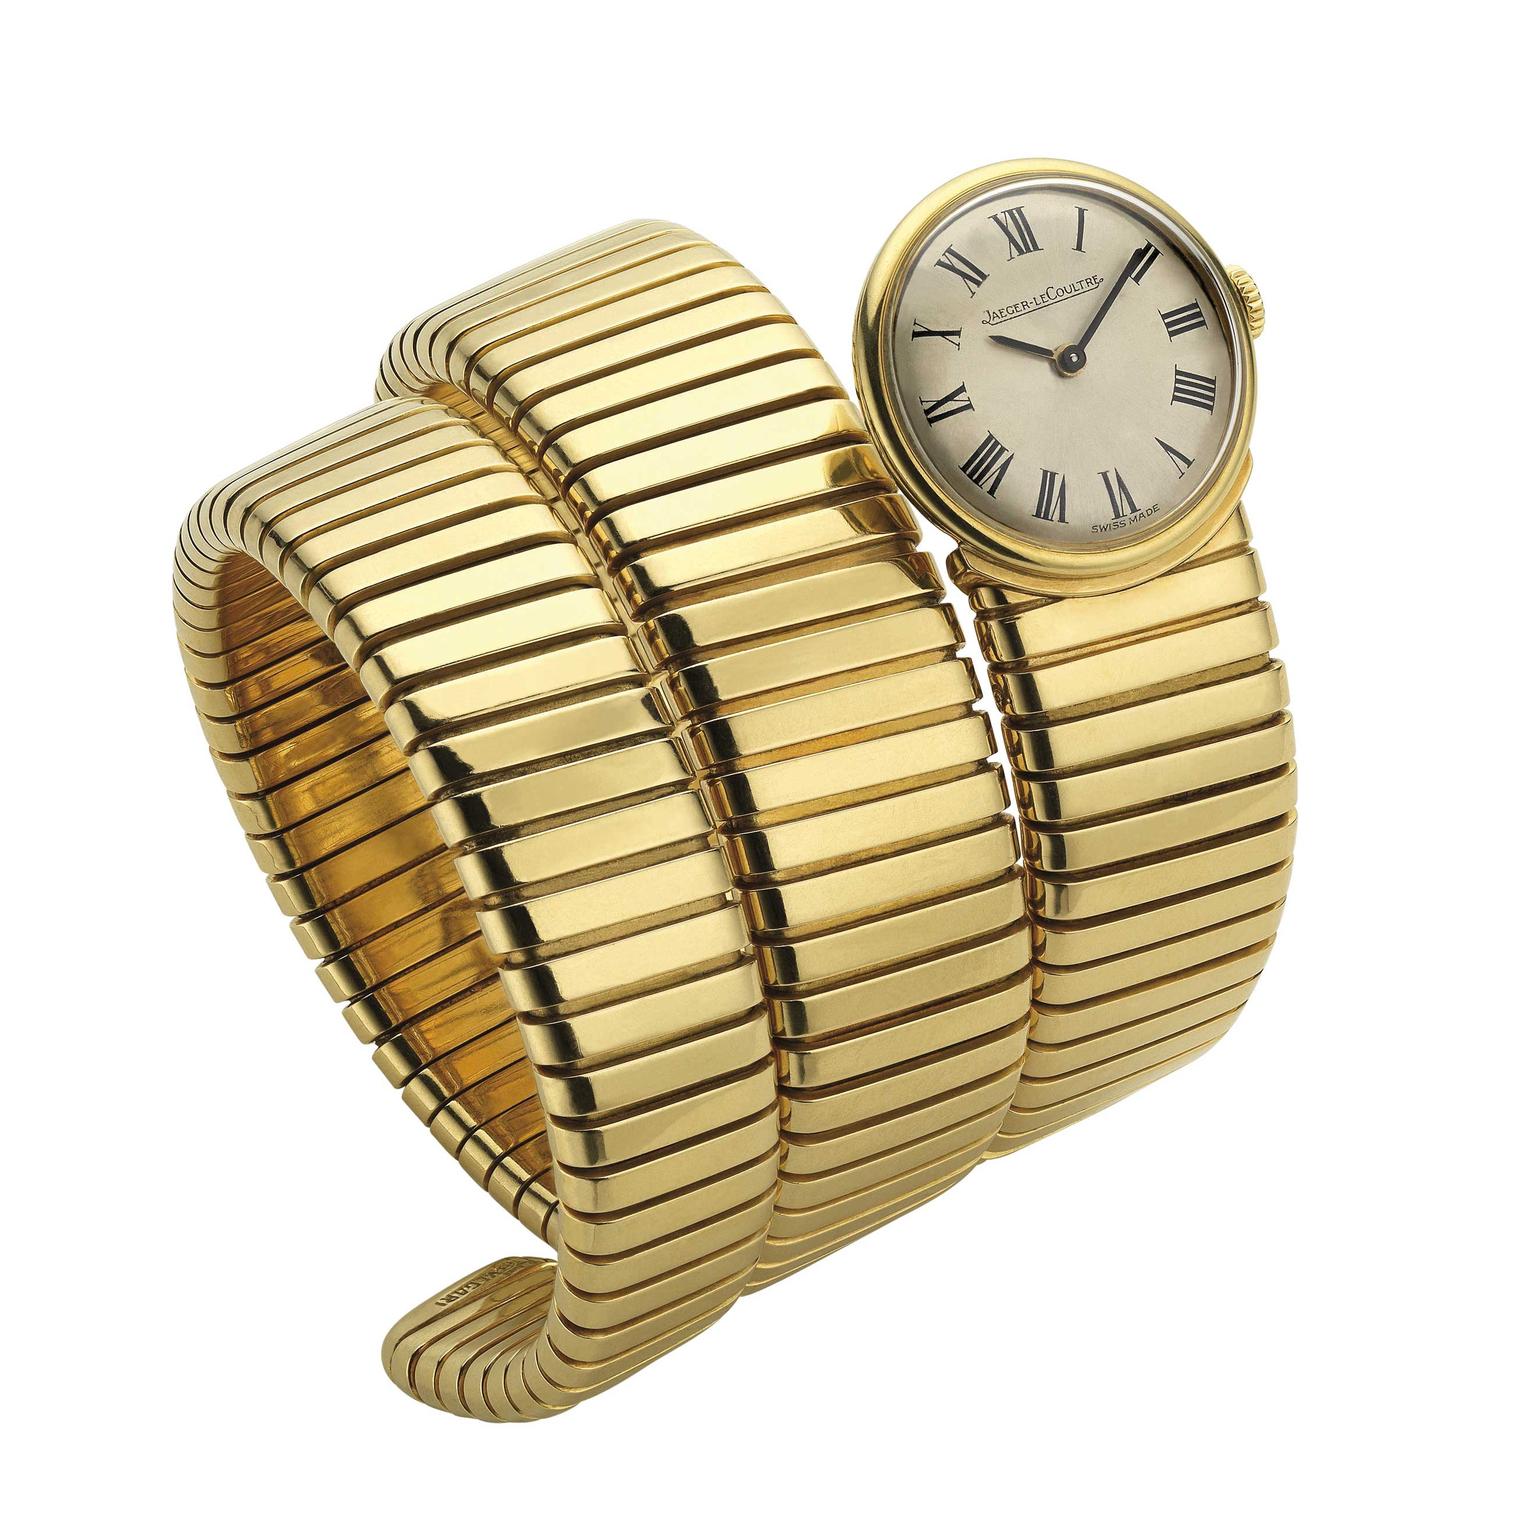 Bulgari Tubogas bracelet watch in yellow gold from circa 1955